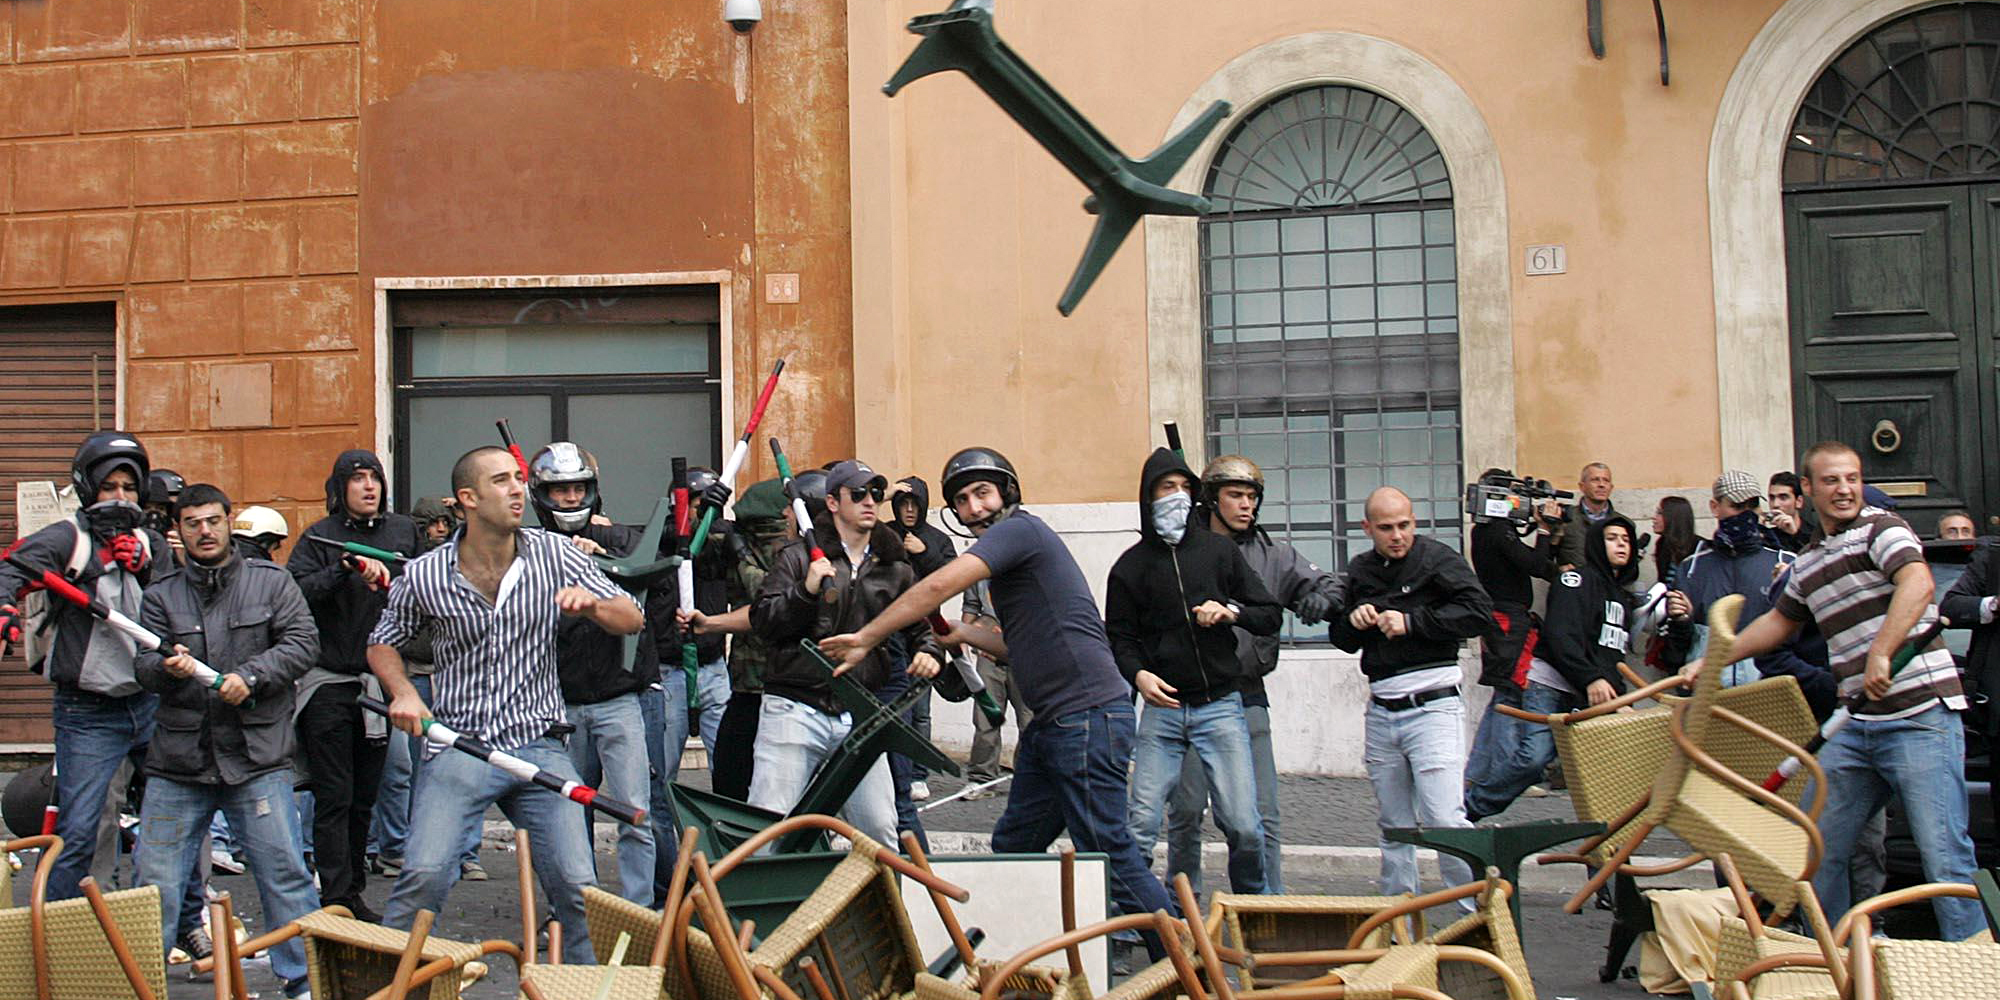 scontri tra studenti di destra e di sinistra a piazza navona  PHOTO SAMANTHA ZUCCHI INSIDEFOTO - Fotografo: ZUCCHI INSIDEFOTO